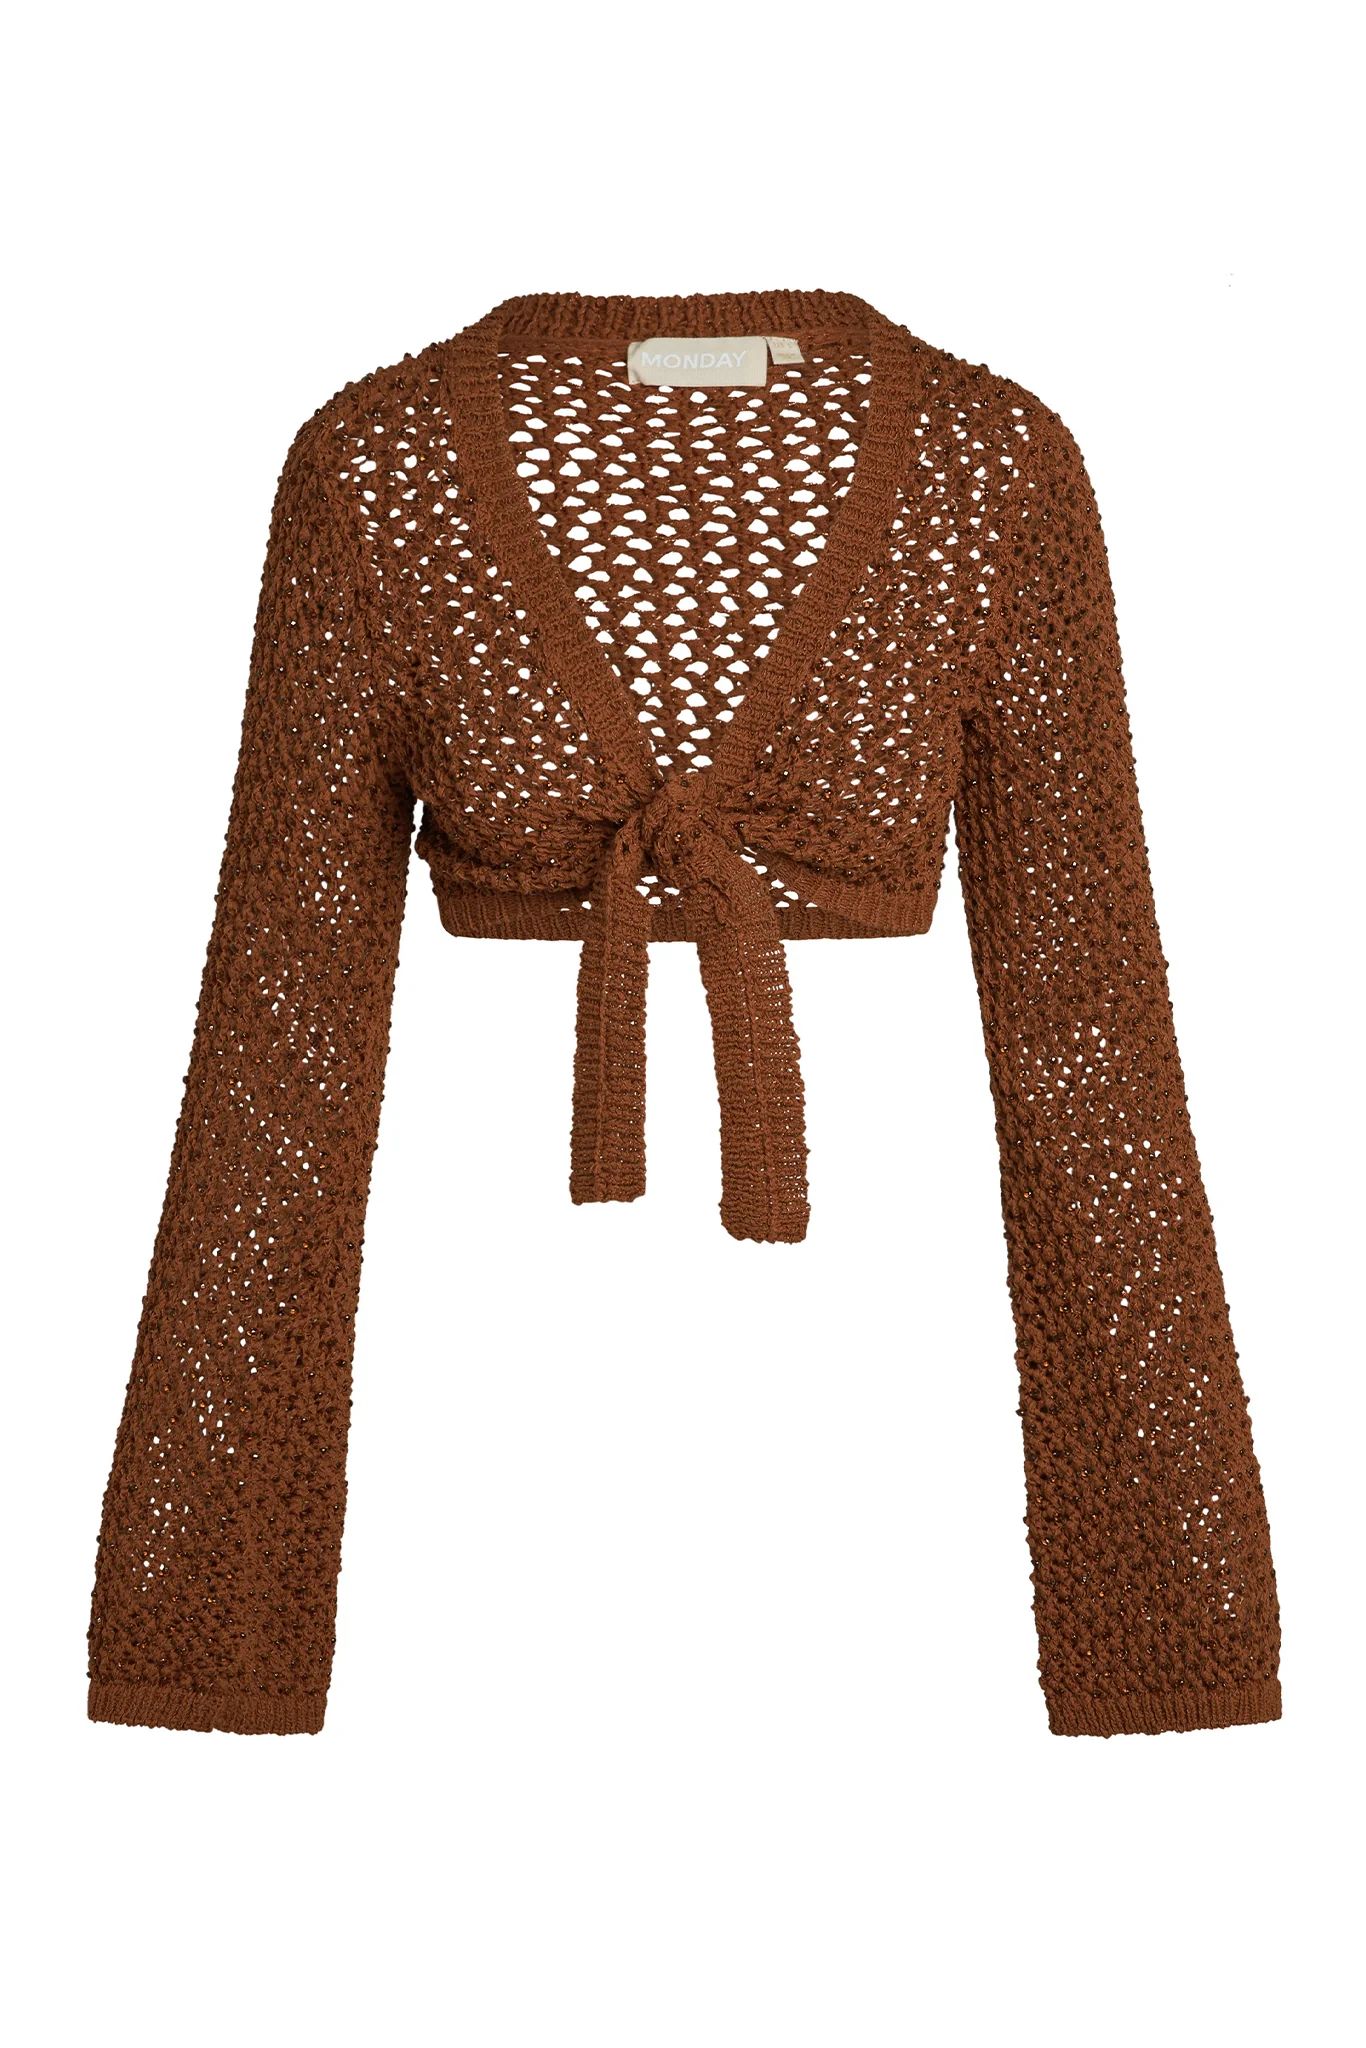 Wailea Top - Bronze Diamond Crochet | Monday Swimwear